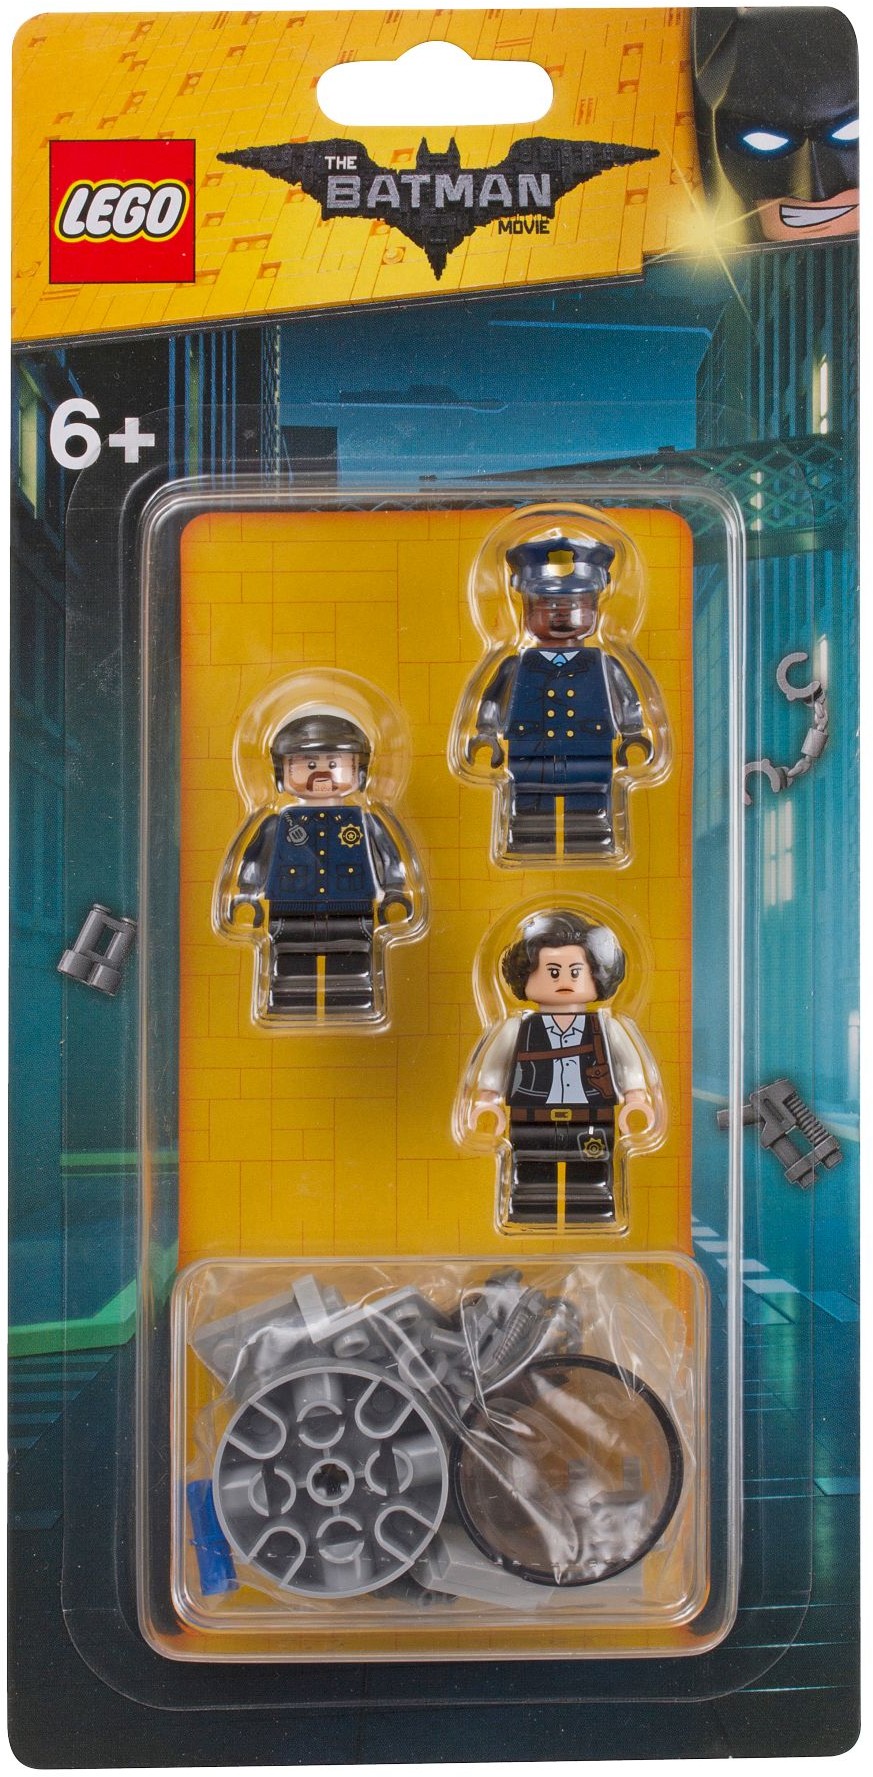 LEGO 853651 The Batman Movie Gotham City Police Department ACCESSORY KIT INTL.